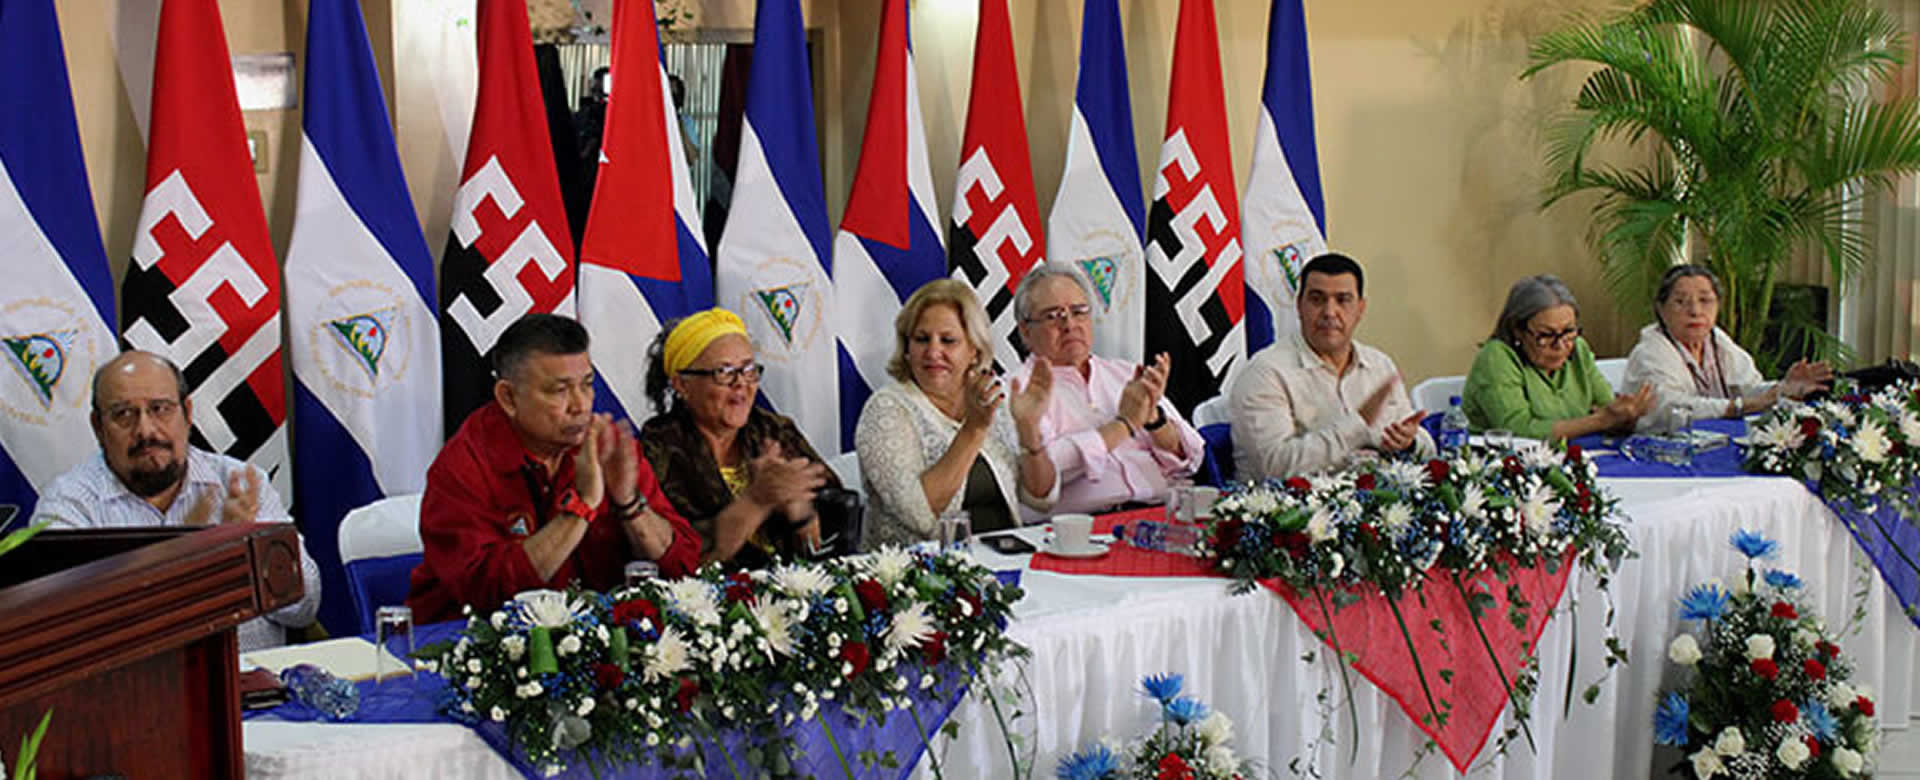 Asamblea Nacional de Nicaragua rinde homenaje al Comandante Fidel